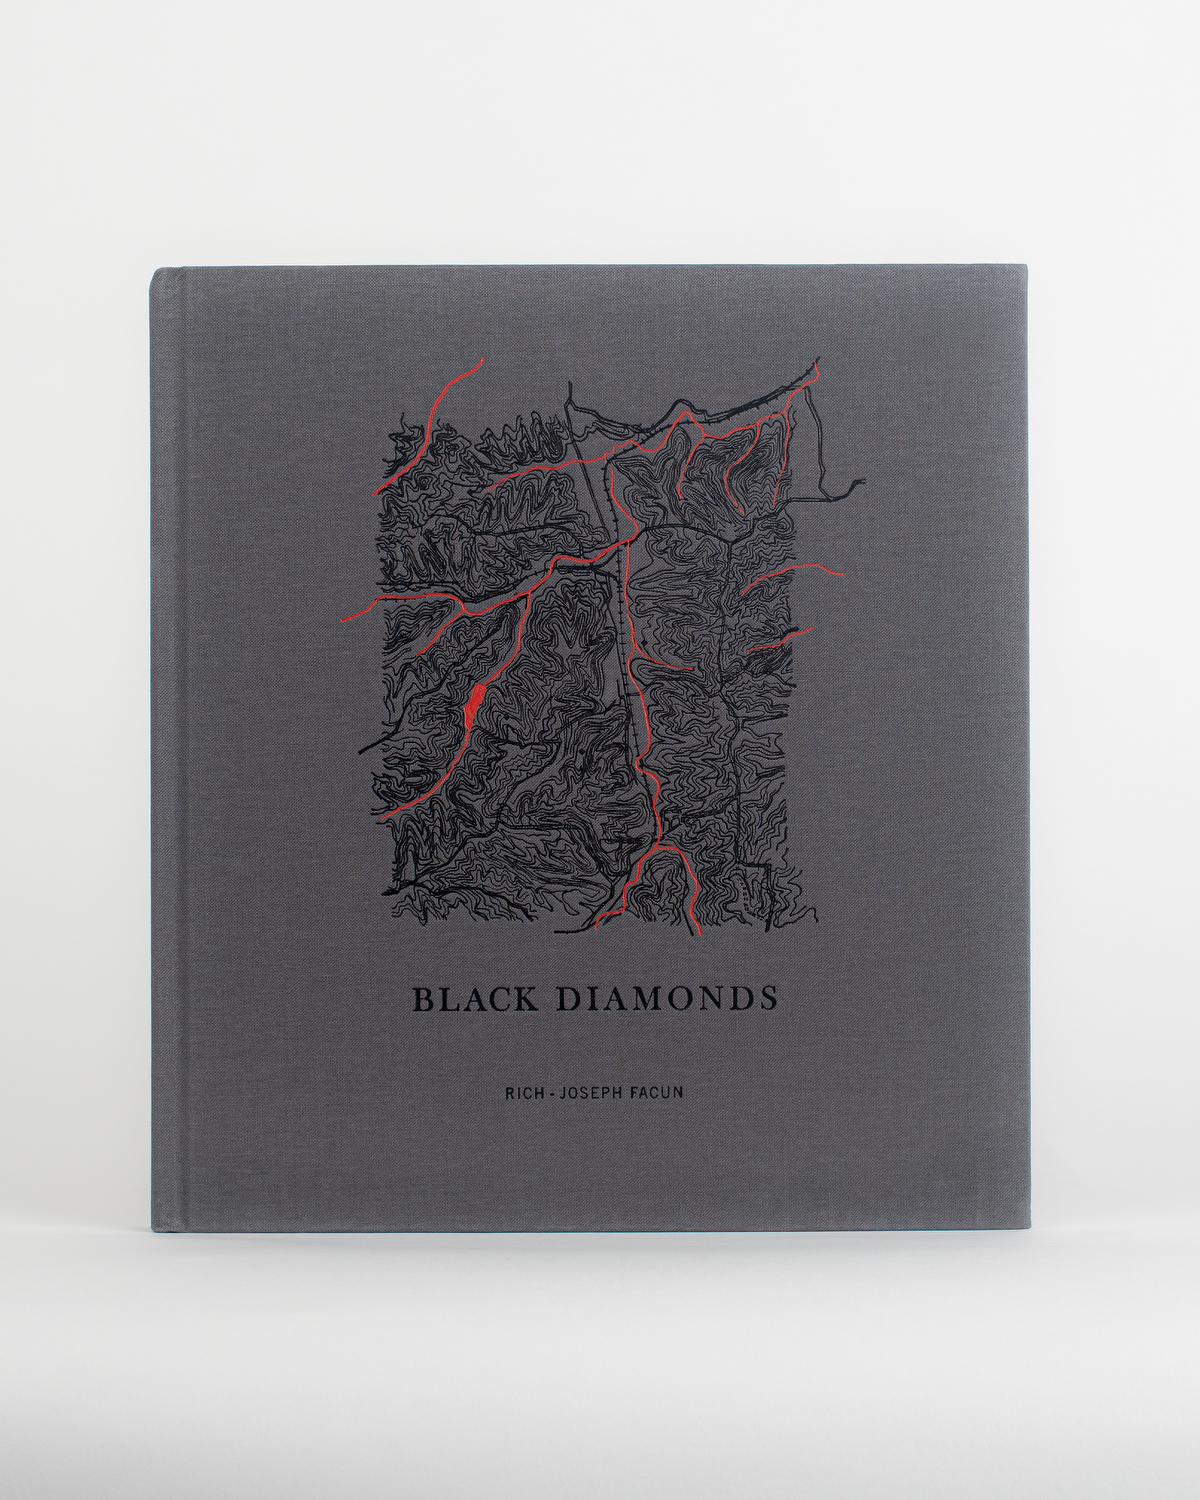 Black Diamonds, Rich-Joseph Facun, Fall Line Press 2021